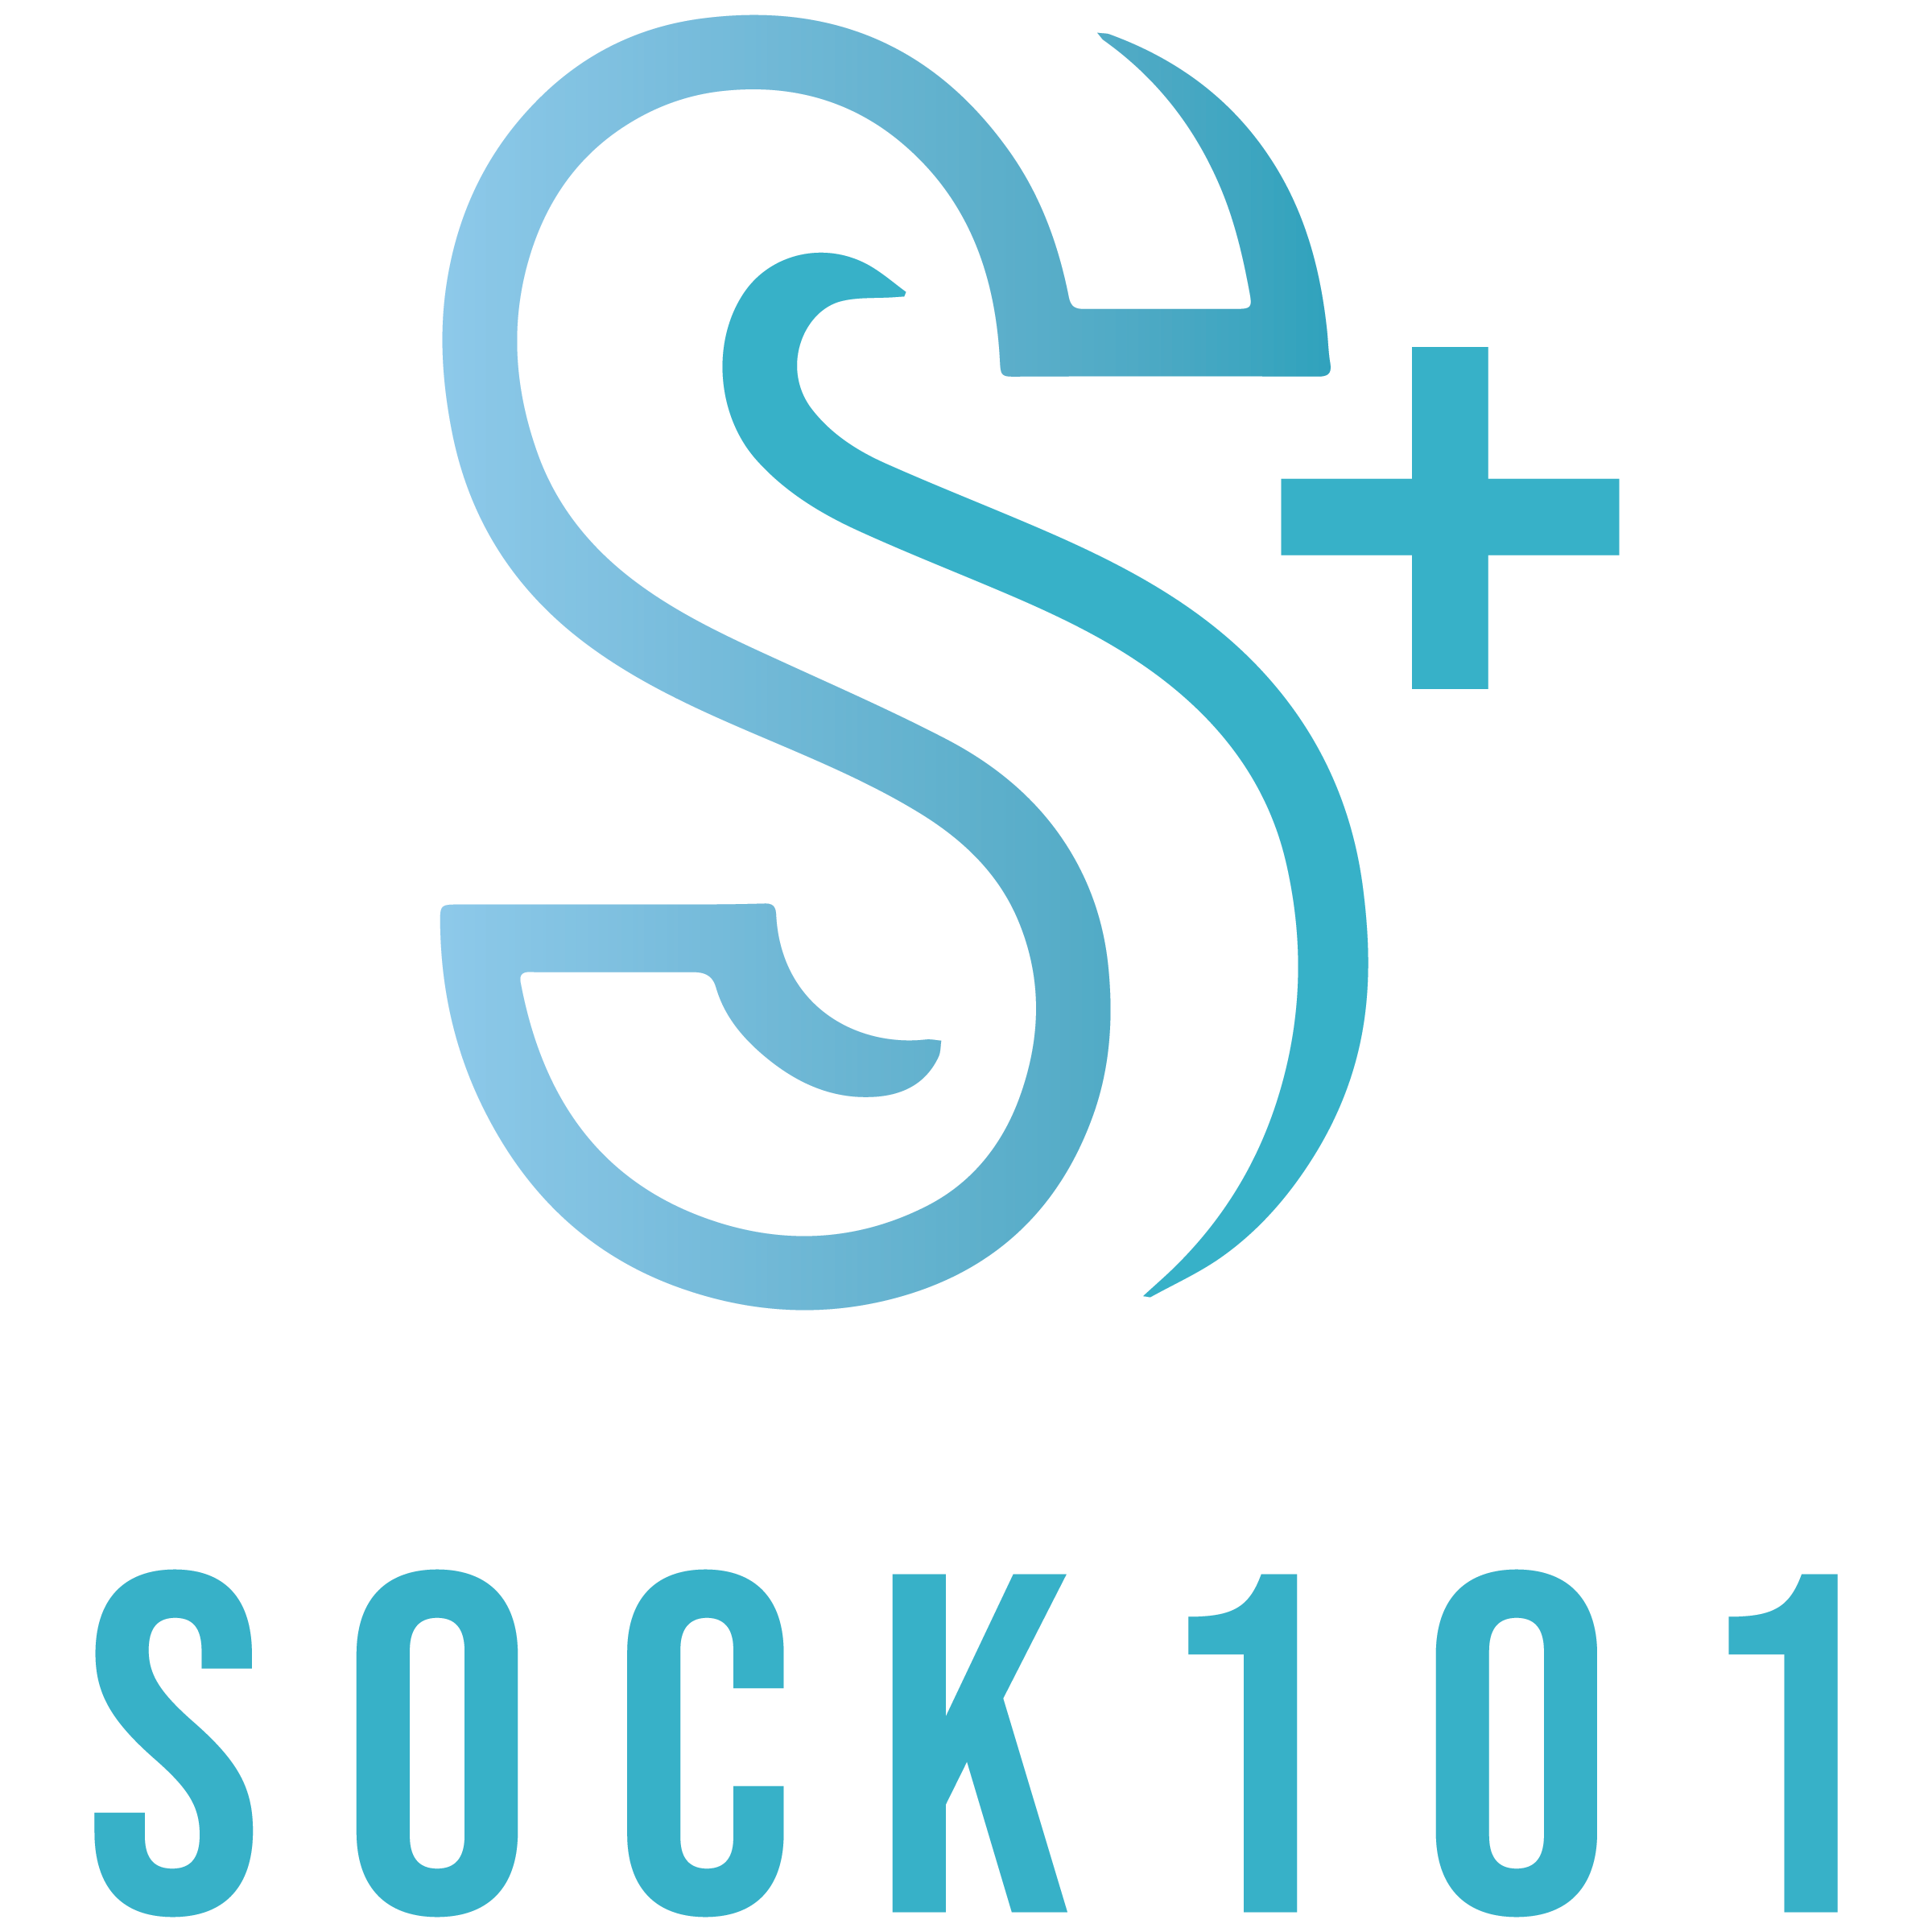 Sock101+